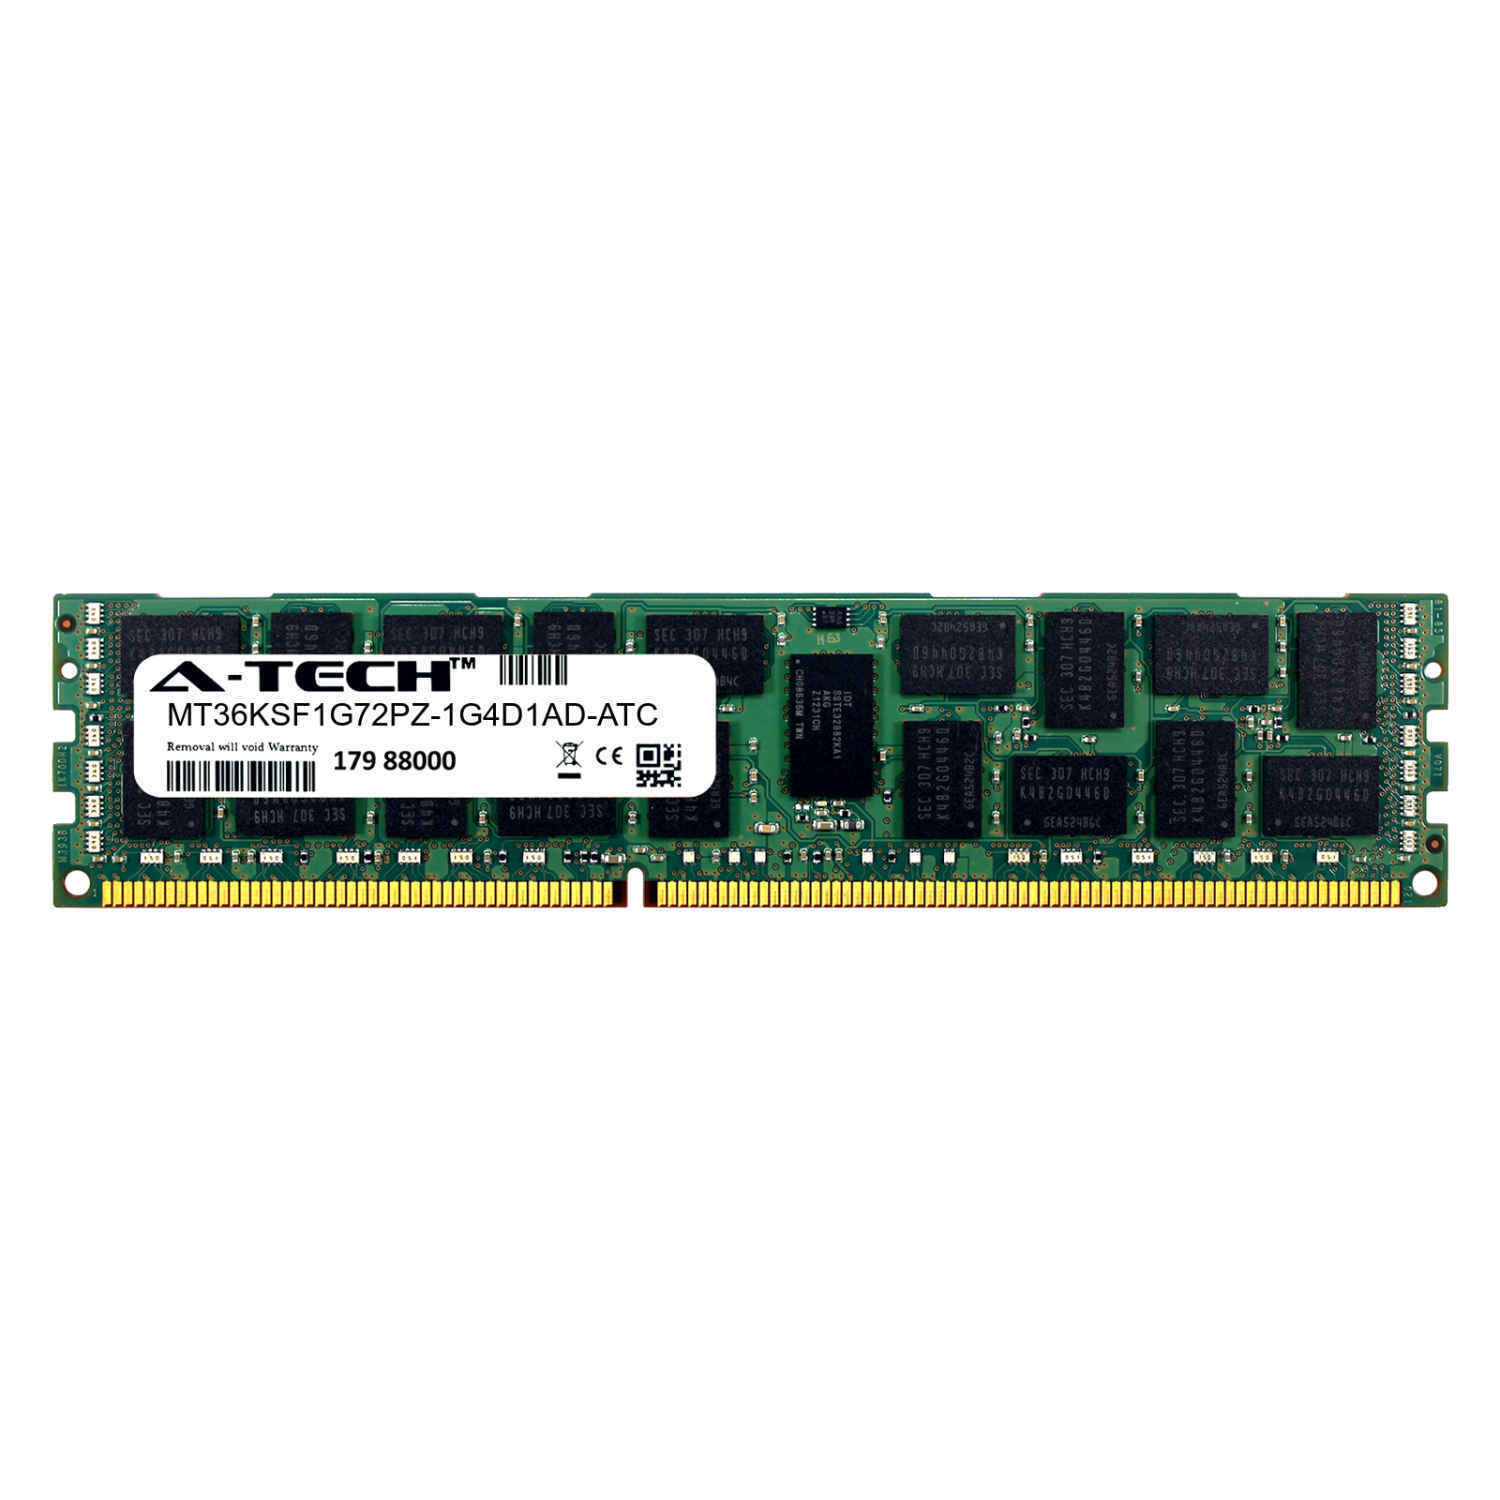 8GB PC3-10600R RDIMM (Micron MT36KSF1G72PZ-1G4D1AD Equivalent) Server Memory RAM